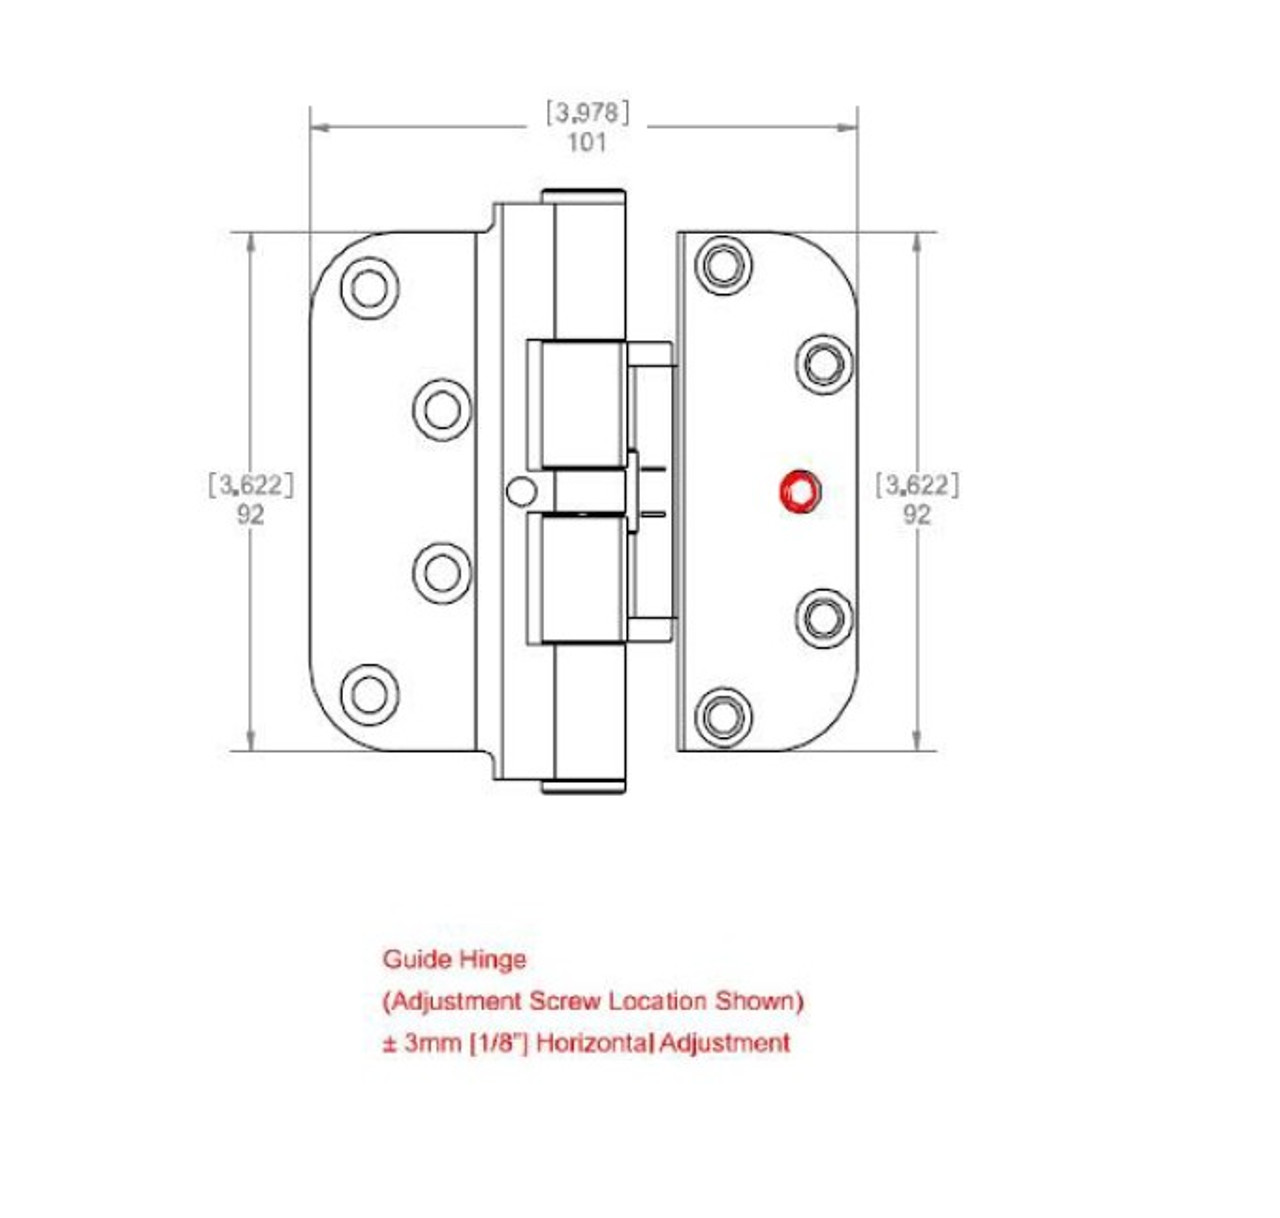 ASHWORTH Door adjustable GUIDE hinge for swing door (#1 on illustration) for doors manufactured 10/17/2015 or newer: